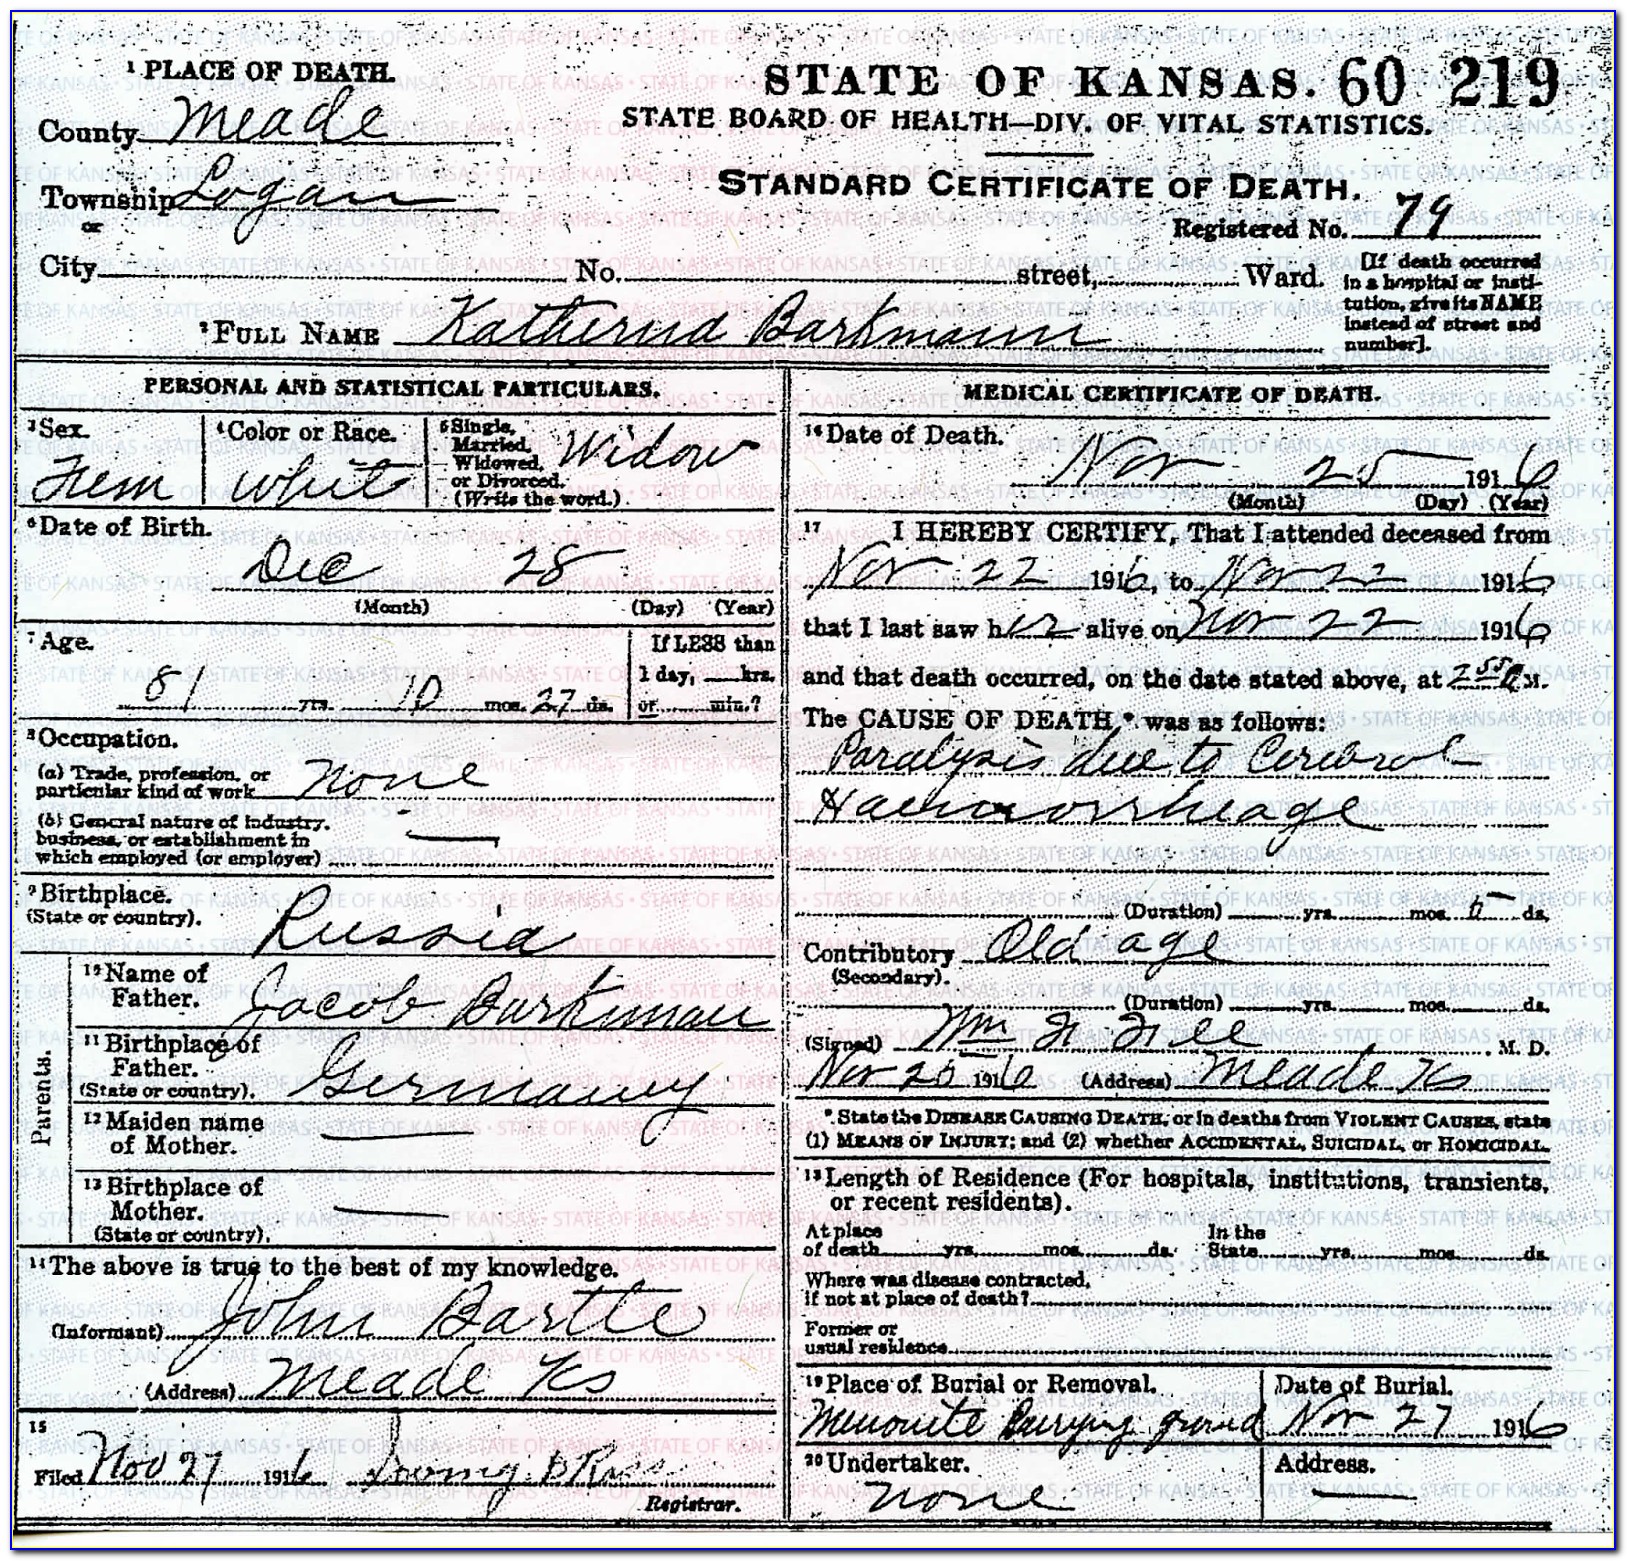 Topeka Kansas Birth Certificate Office